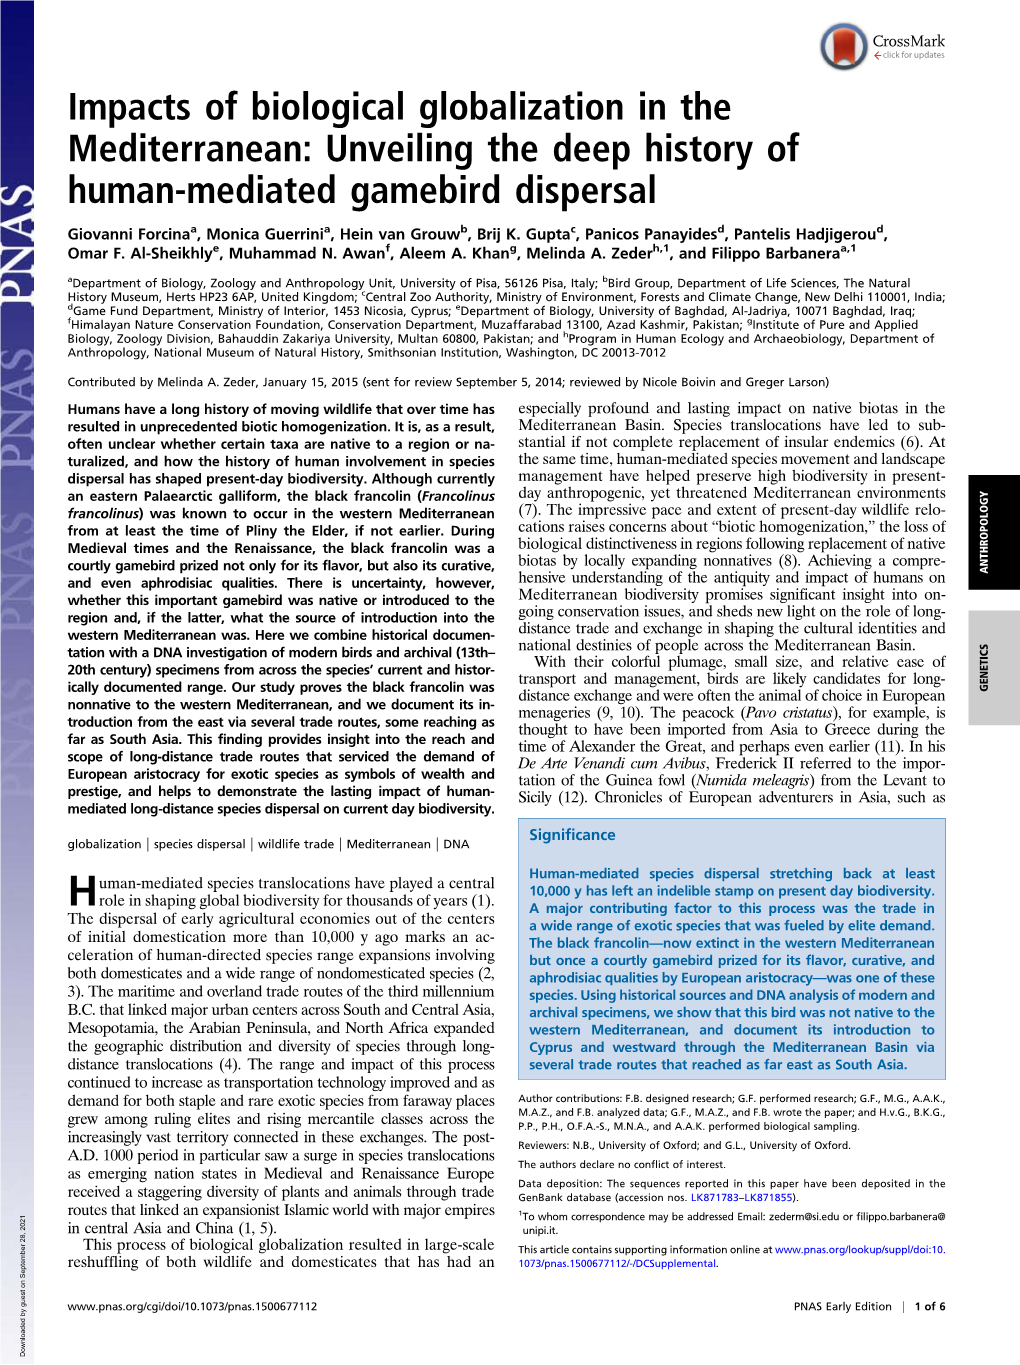 Unveiling the Deep History of Human-Mediated Gamebird Dispersal